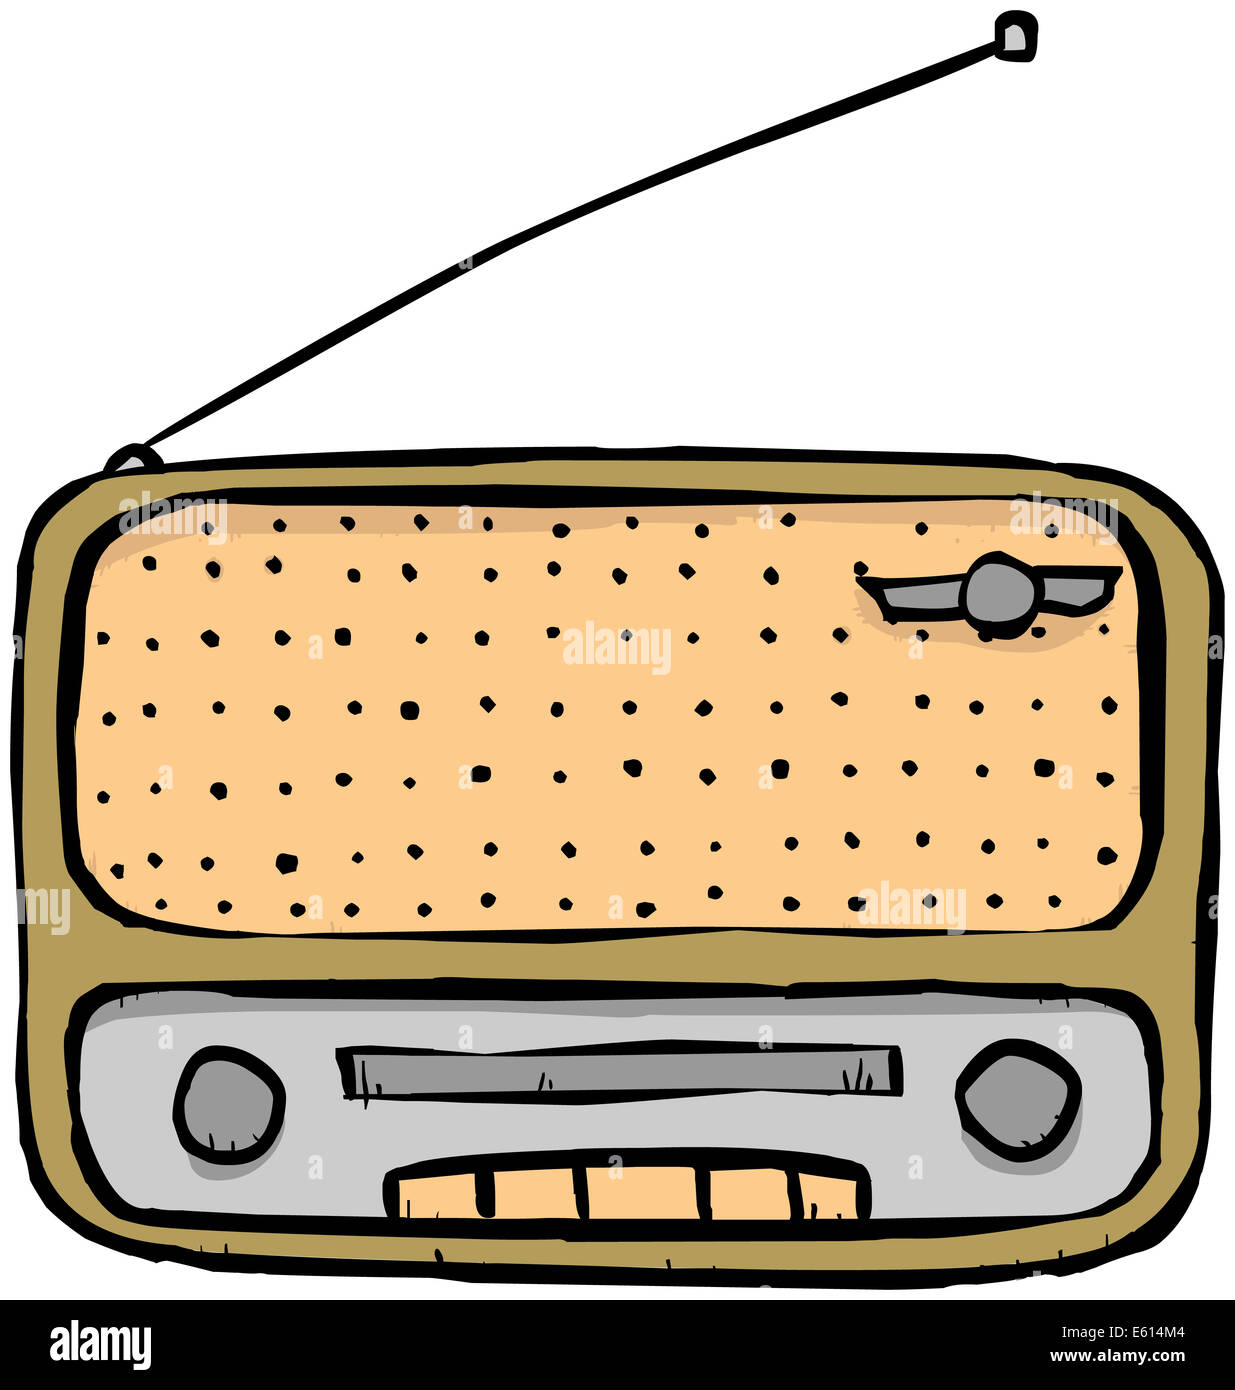 Illustration of an old wooden cased wireless radio Stock Photo